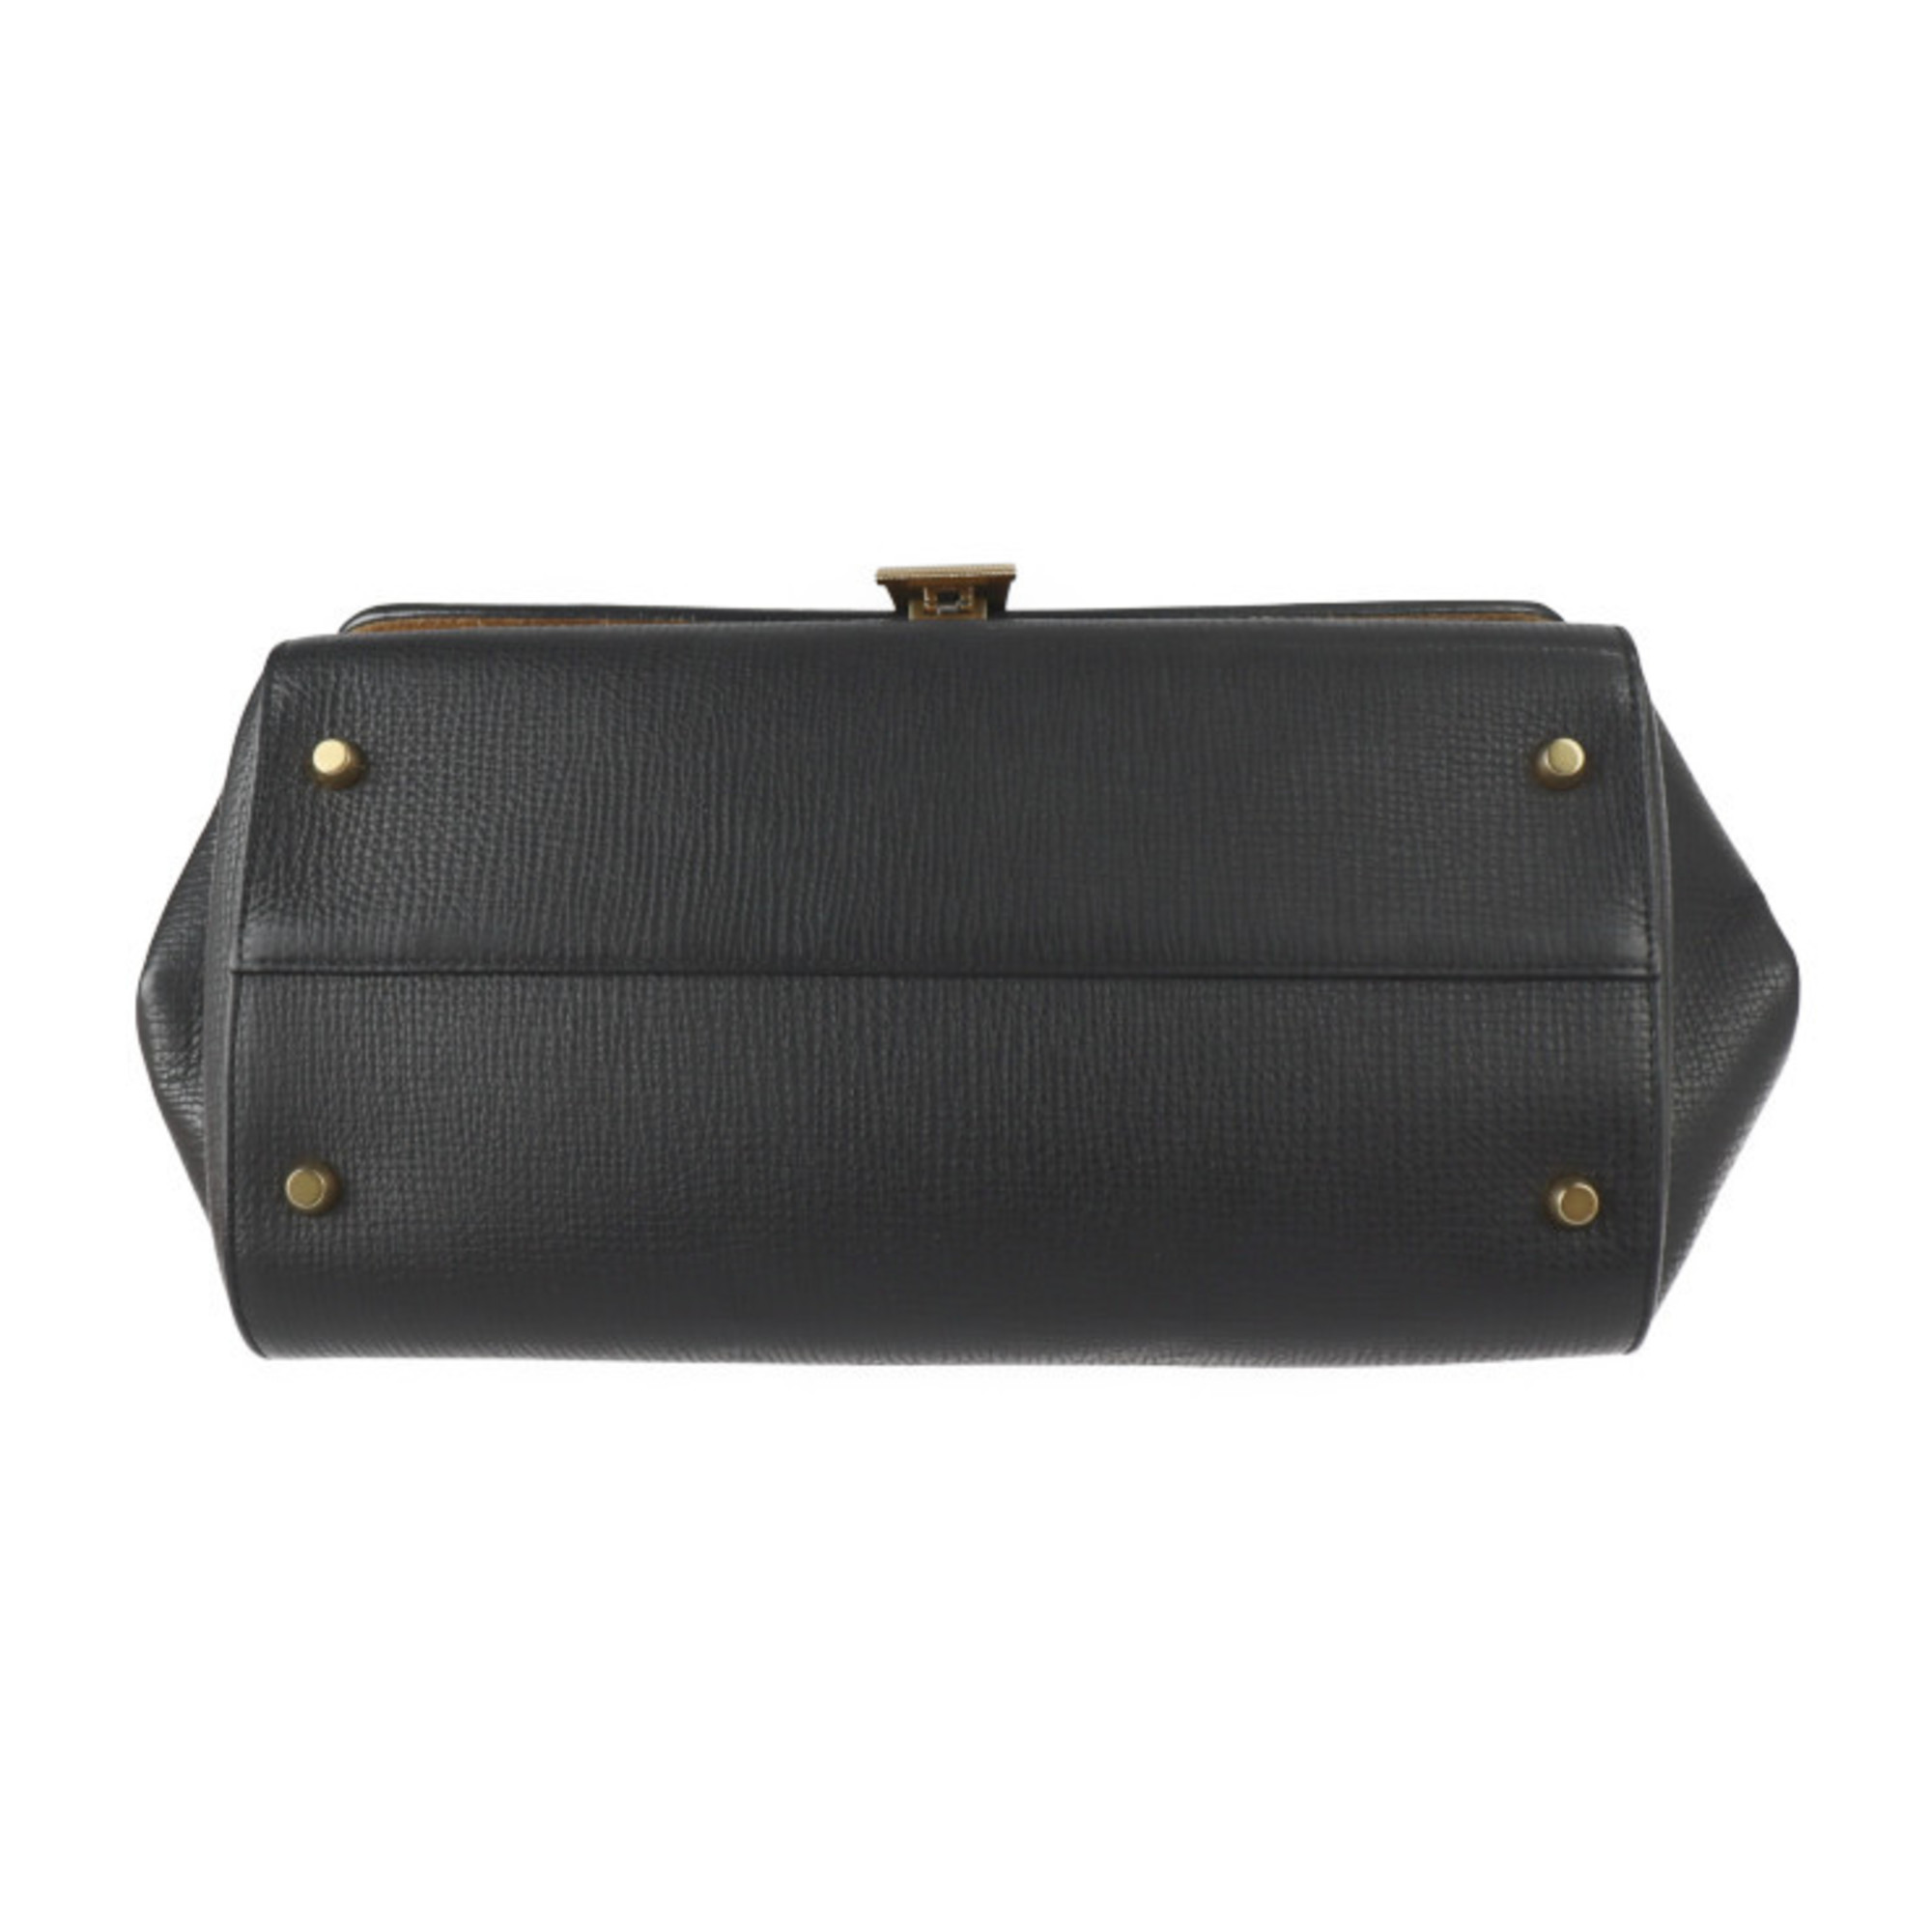 BOTTEGA VENETA Bottega Veneta ANGLE angle Palmellato shoulder bag 576143 calf leather black gold hardware crossbody